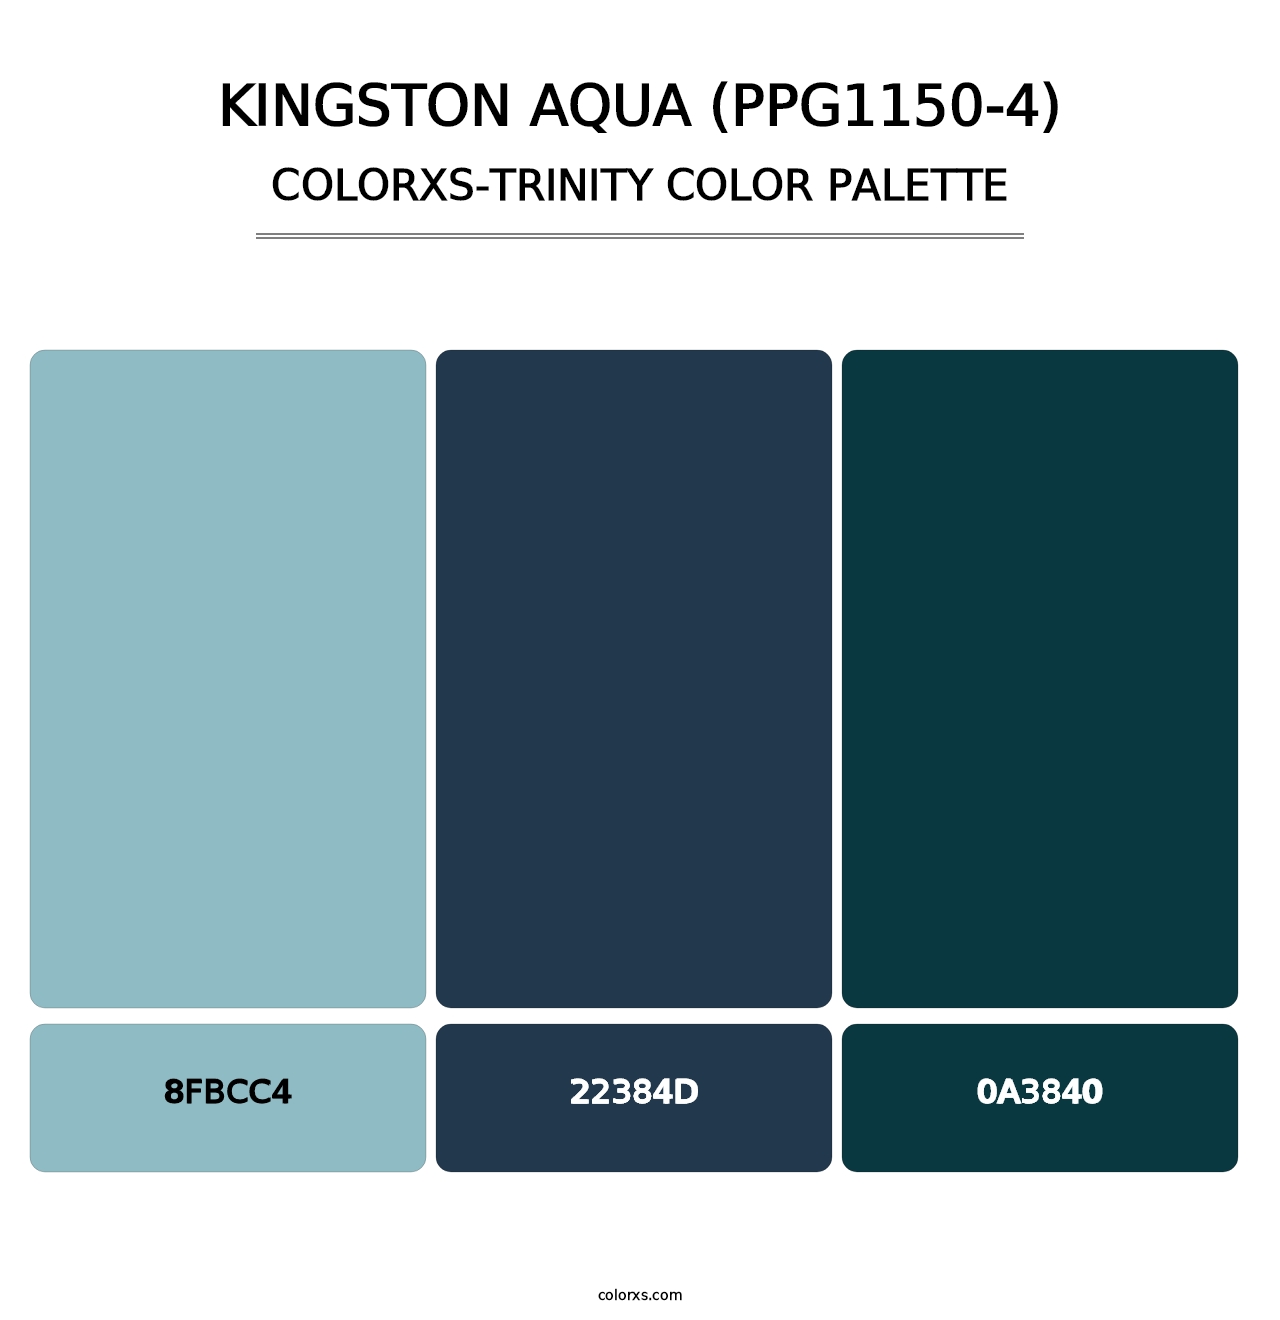 Kingston Aqua (PPG1150-4) - Colorxs Trinity Palette